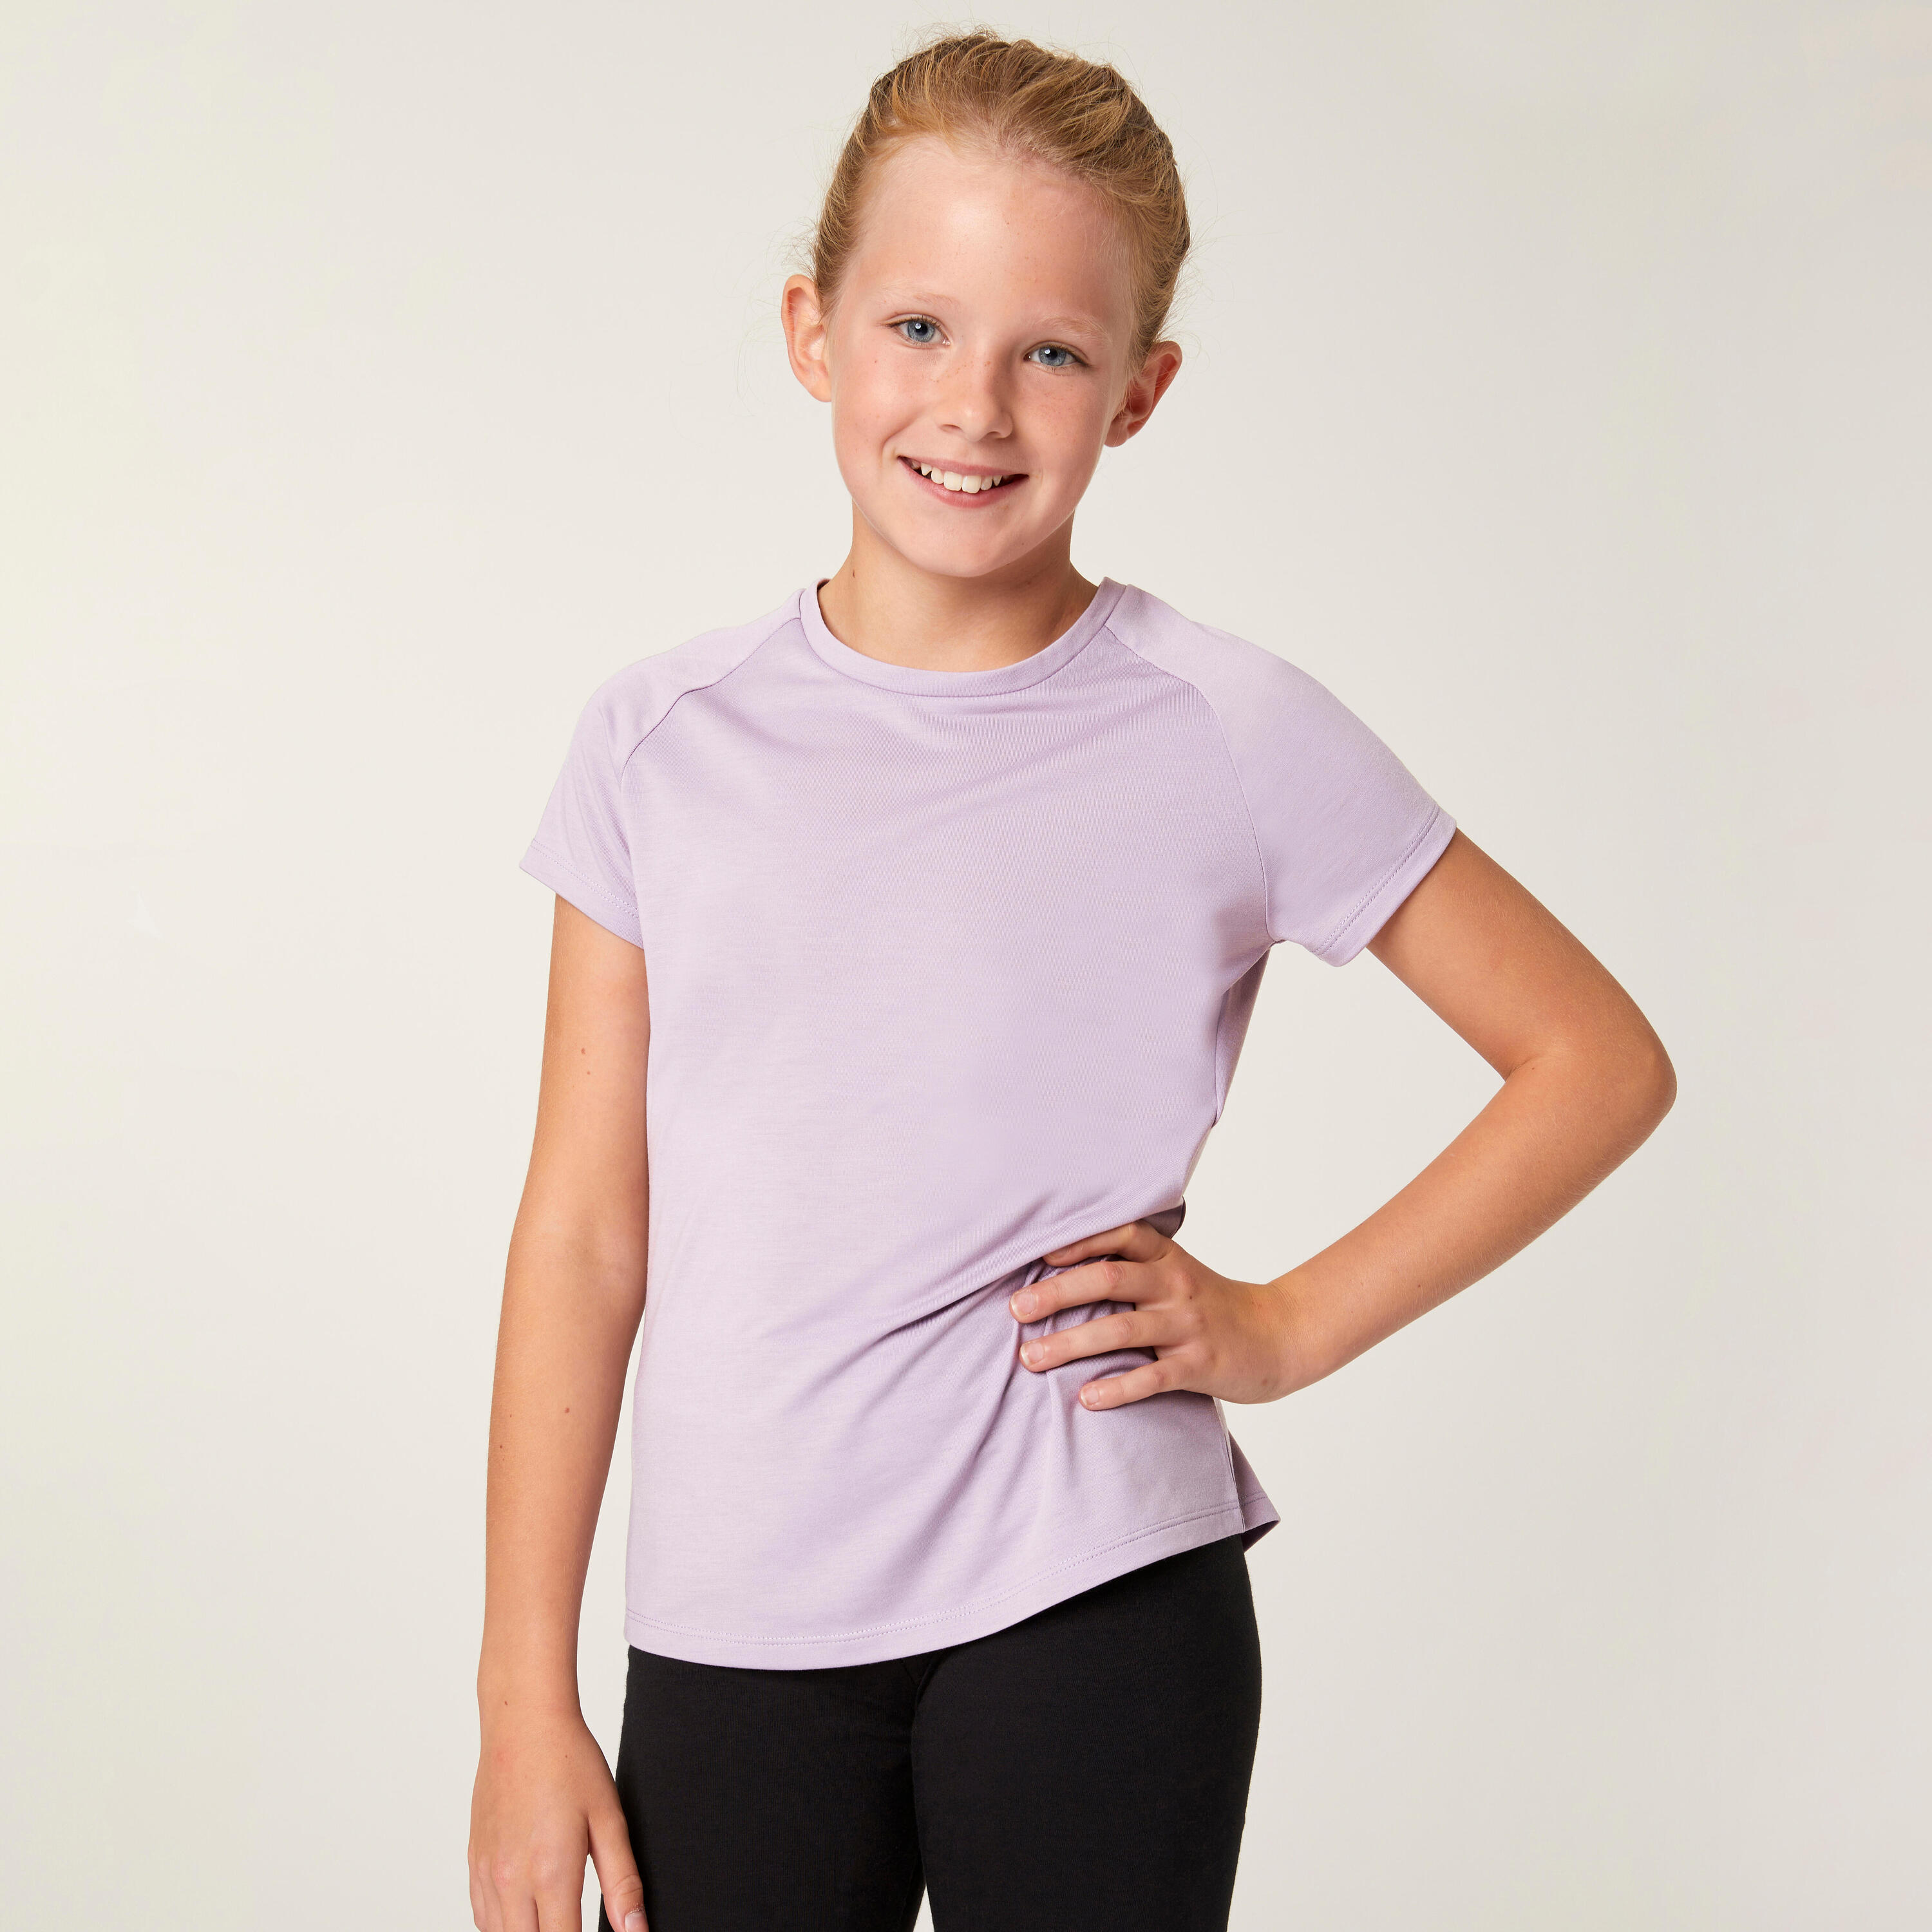 DECATHLON Girls' Breathable T-Shirt S500 - Purple